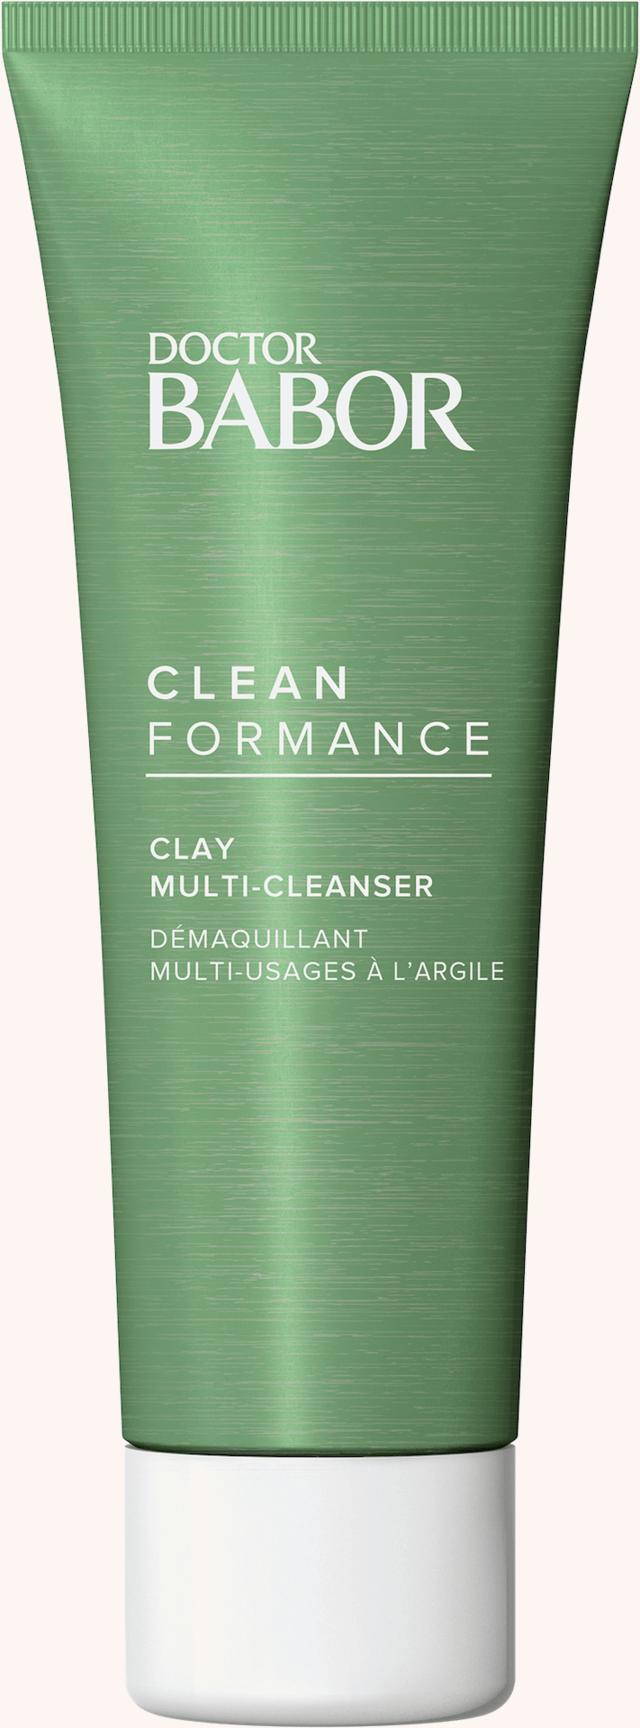 Cleanformance Clay Multi-Cleanser 50 ml